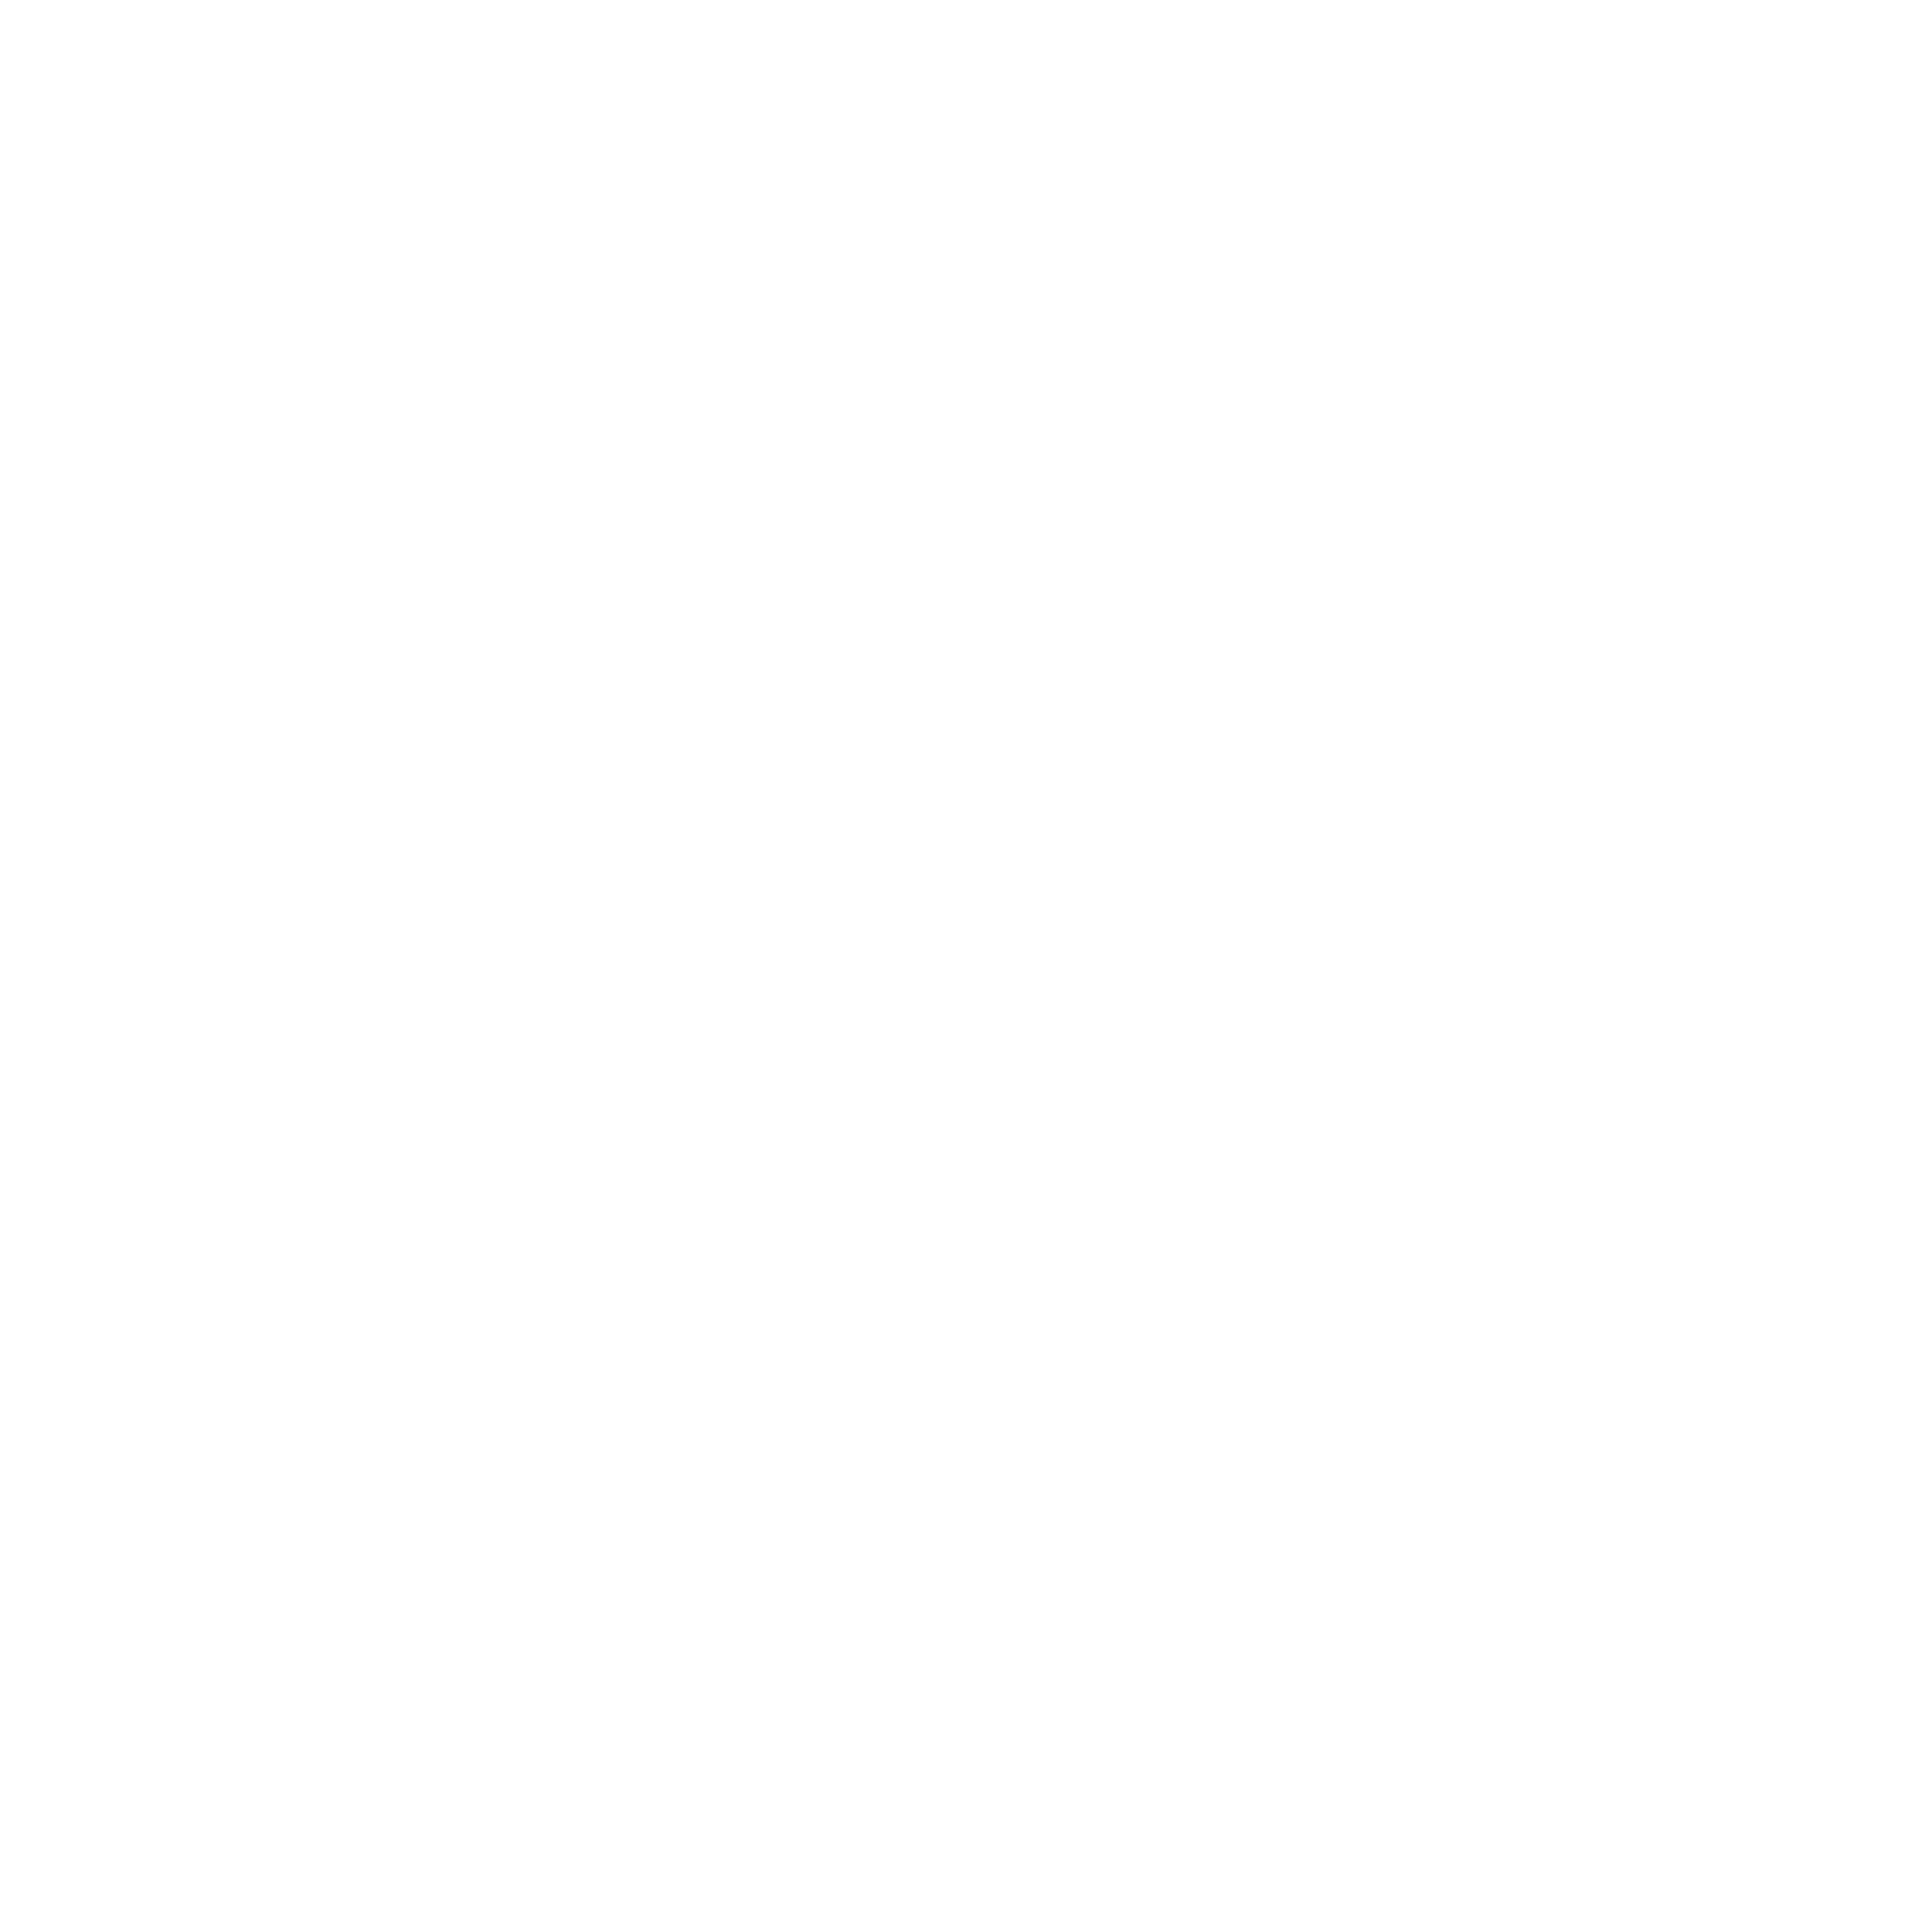 Corse extreme Sud